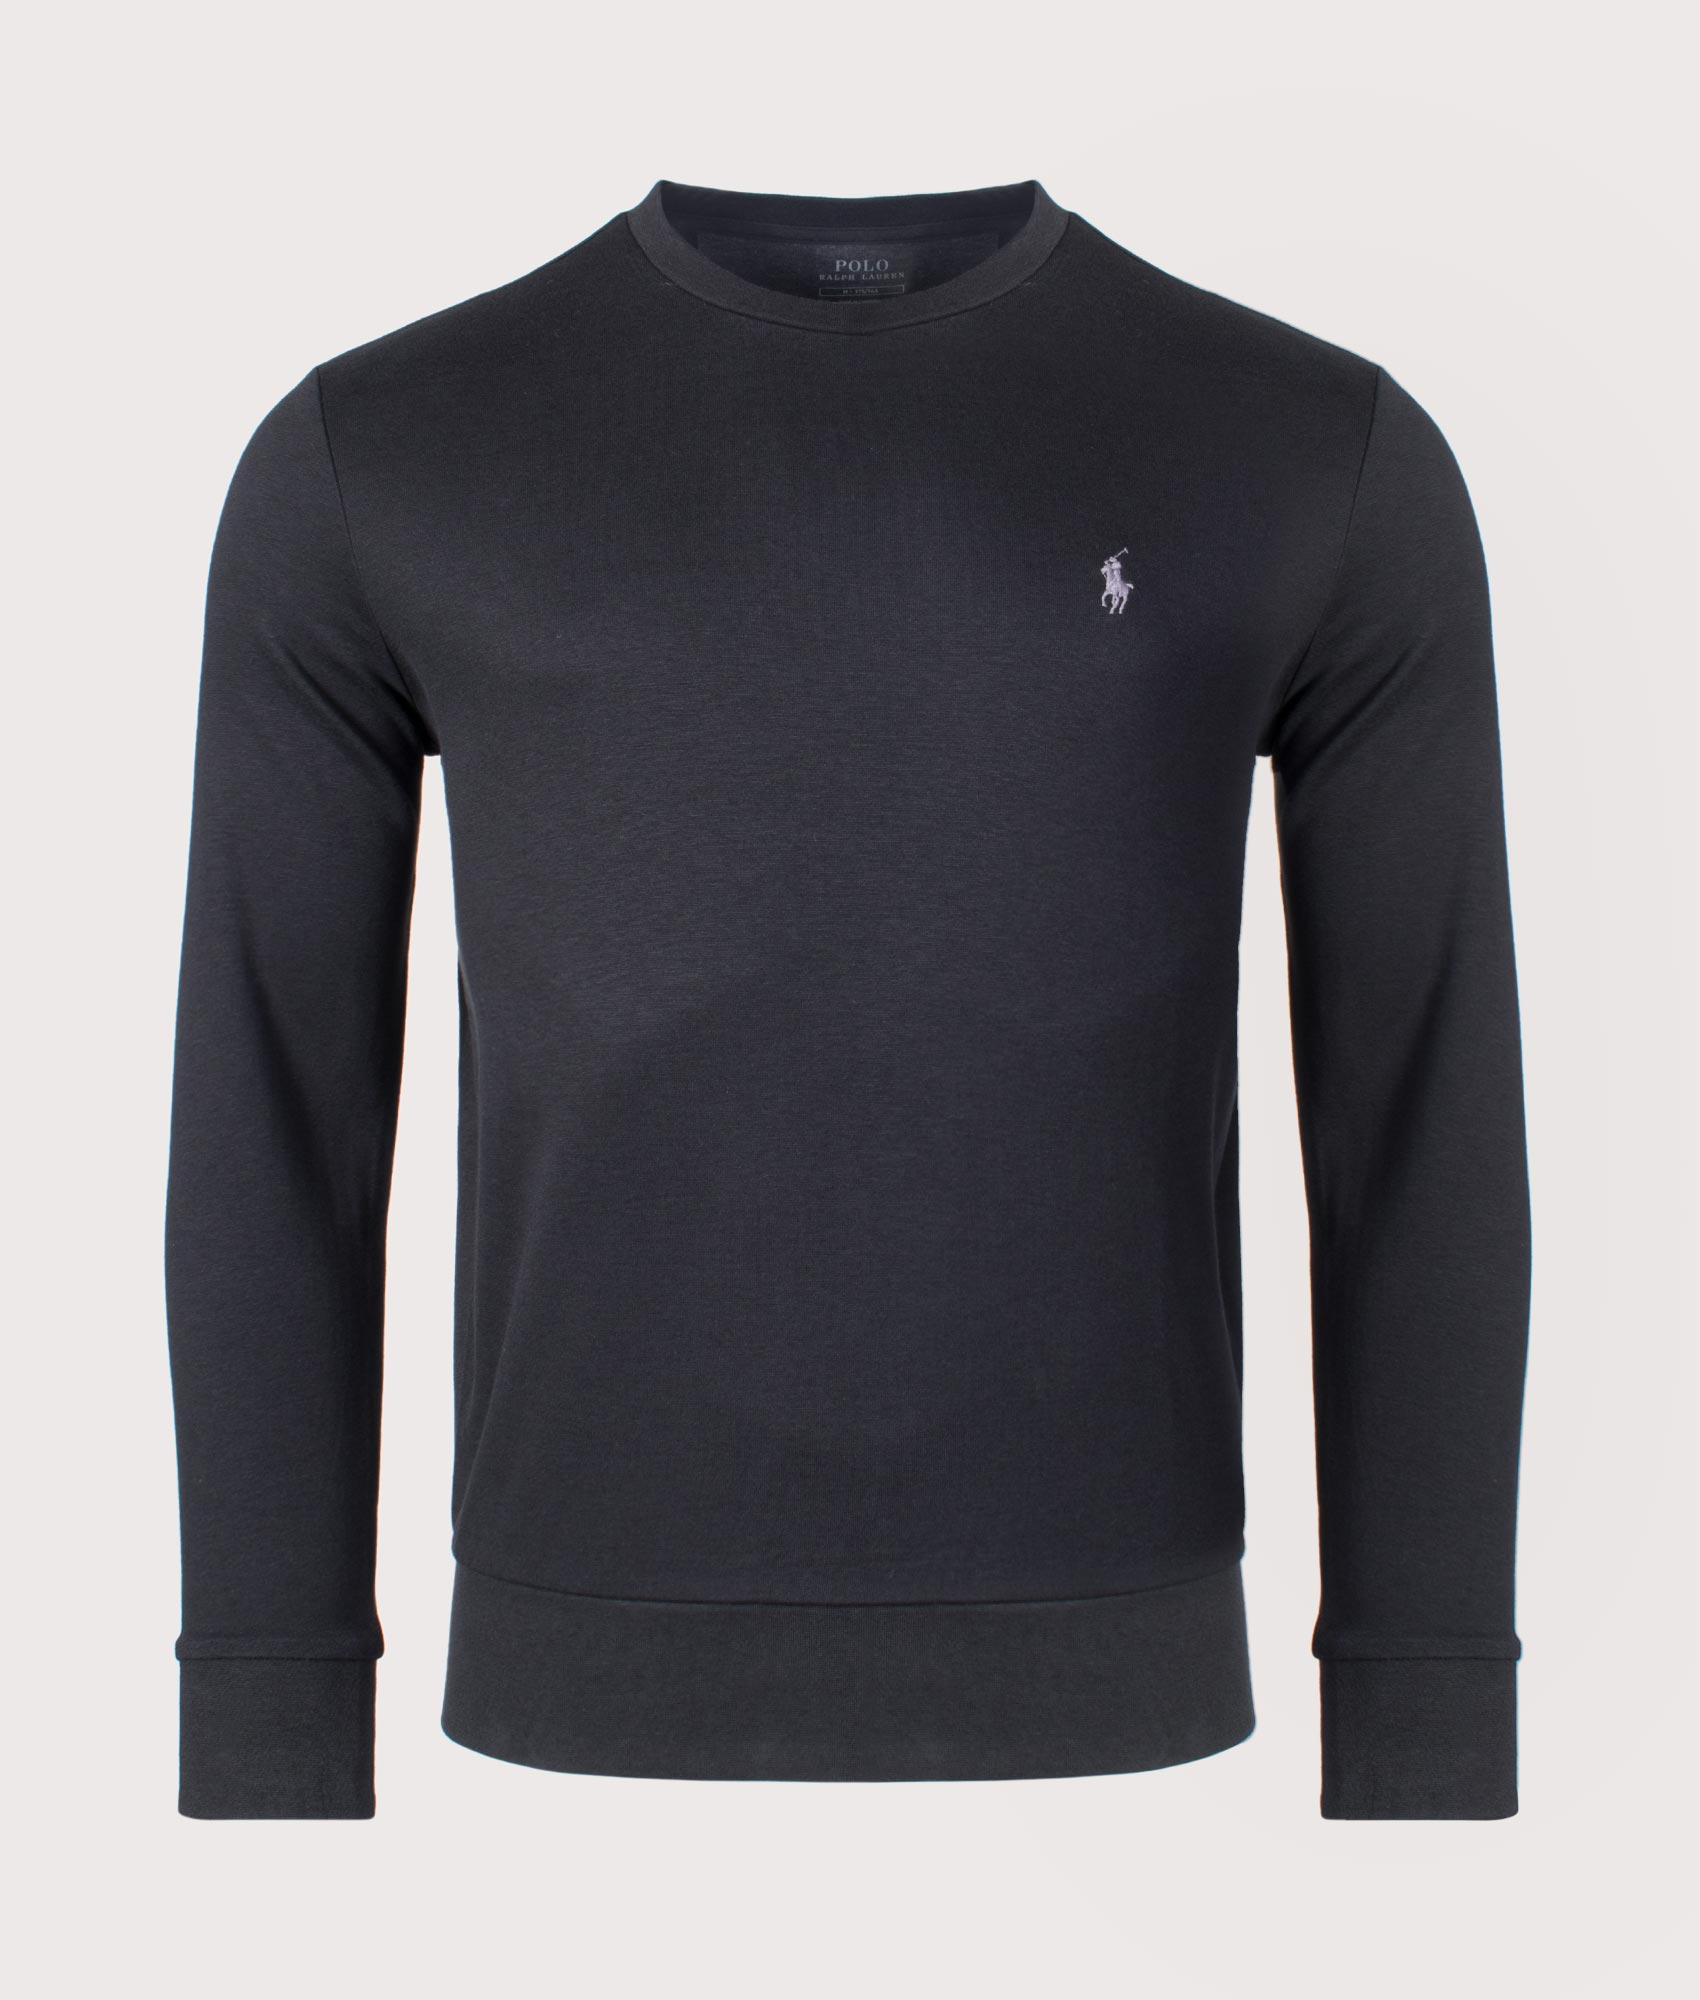 Polo Ralph Lauren Mens Luxury Jersey Crew Neck Sweatshirt - Colour: 022 Polo Black - Size: Large